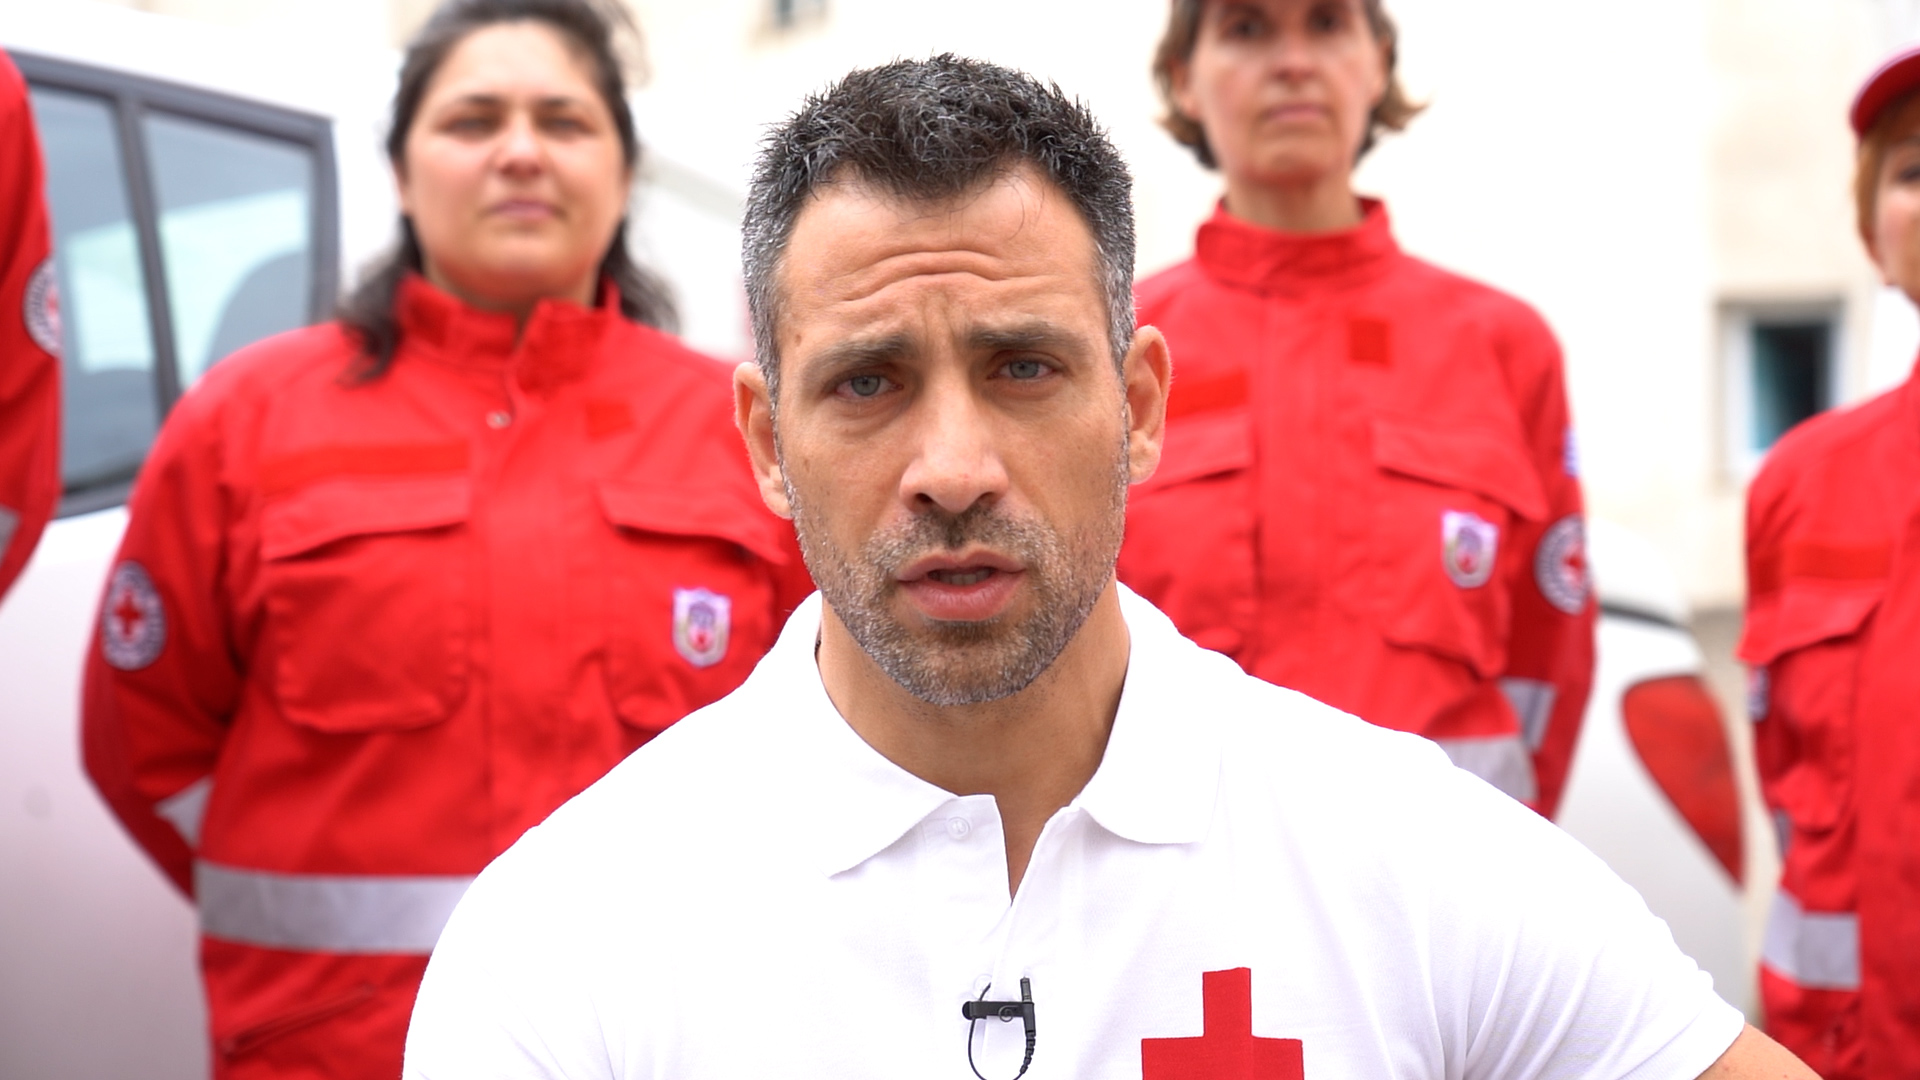 O Παραολυμπιονίκης, Πάνος Τριανταφύλλου, στο πλευρό του Ελληνικού Ερυθρού Σταυρού για την προσέλκυση νέων εθελοντών